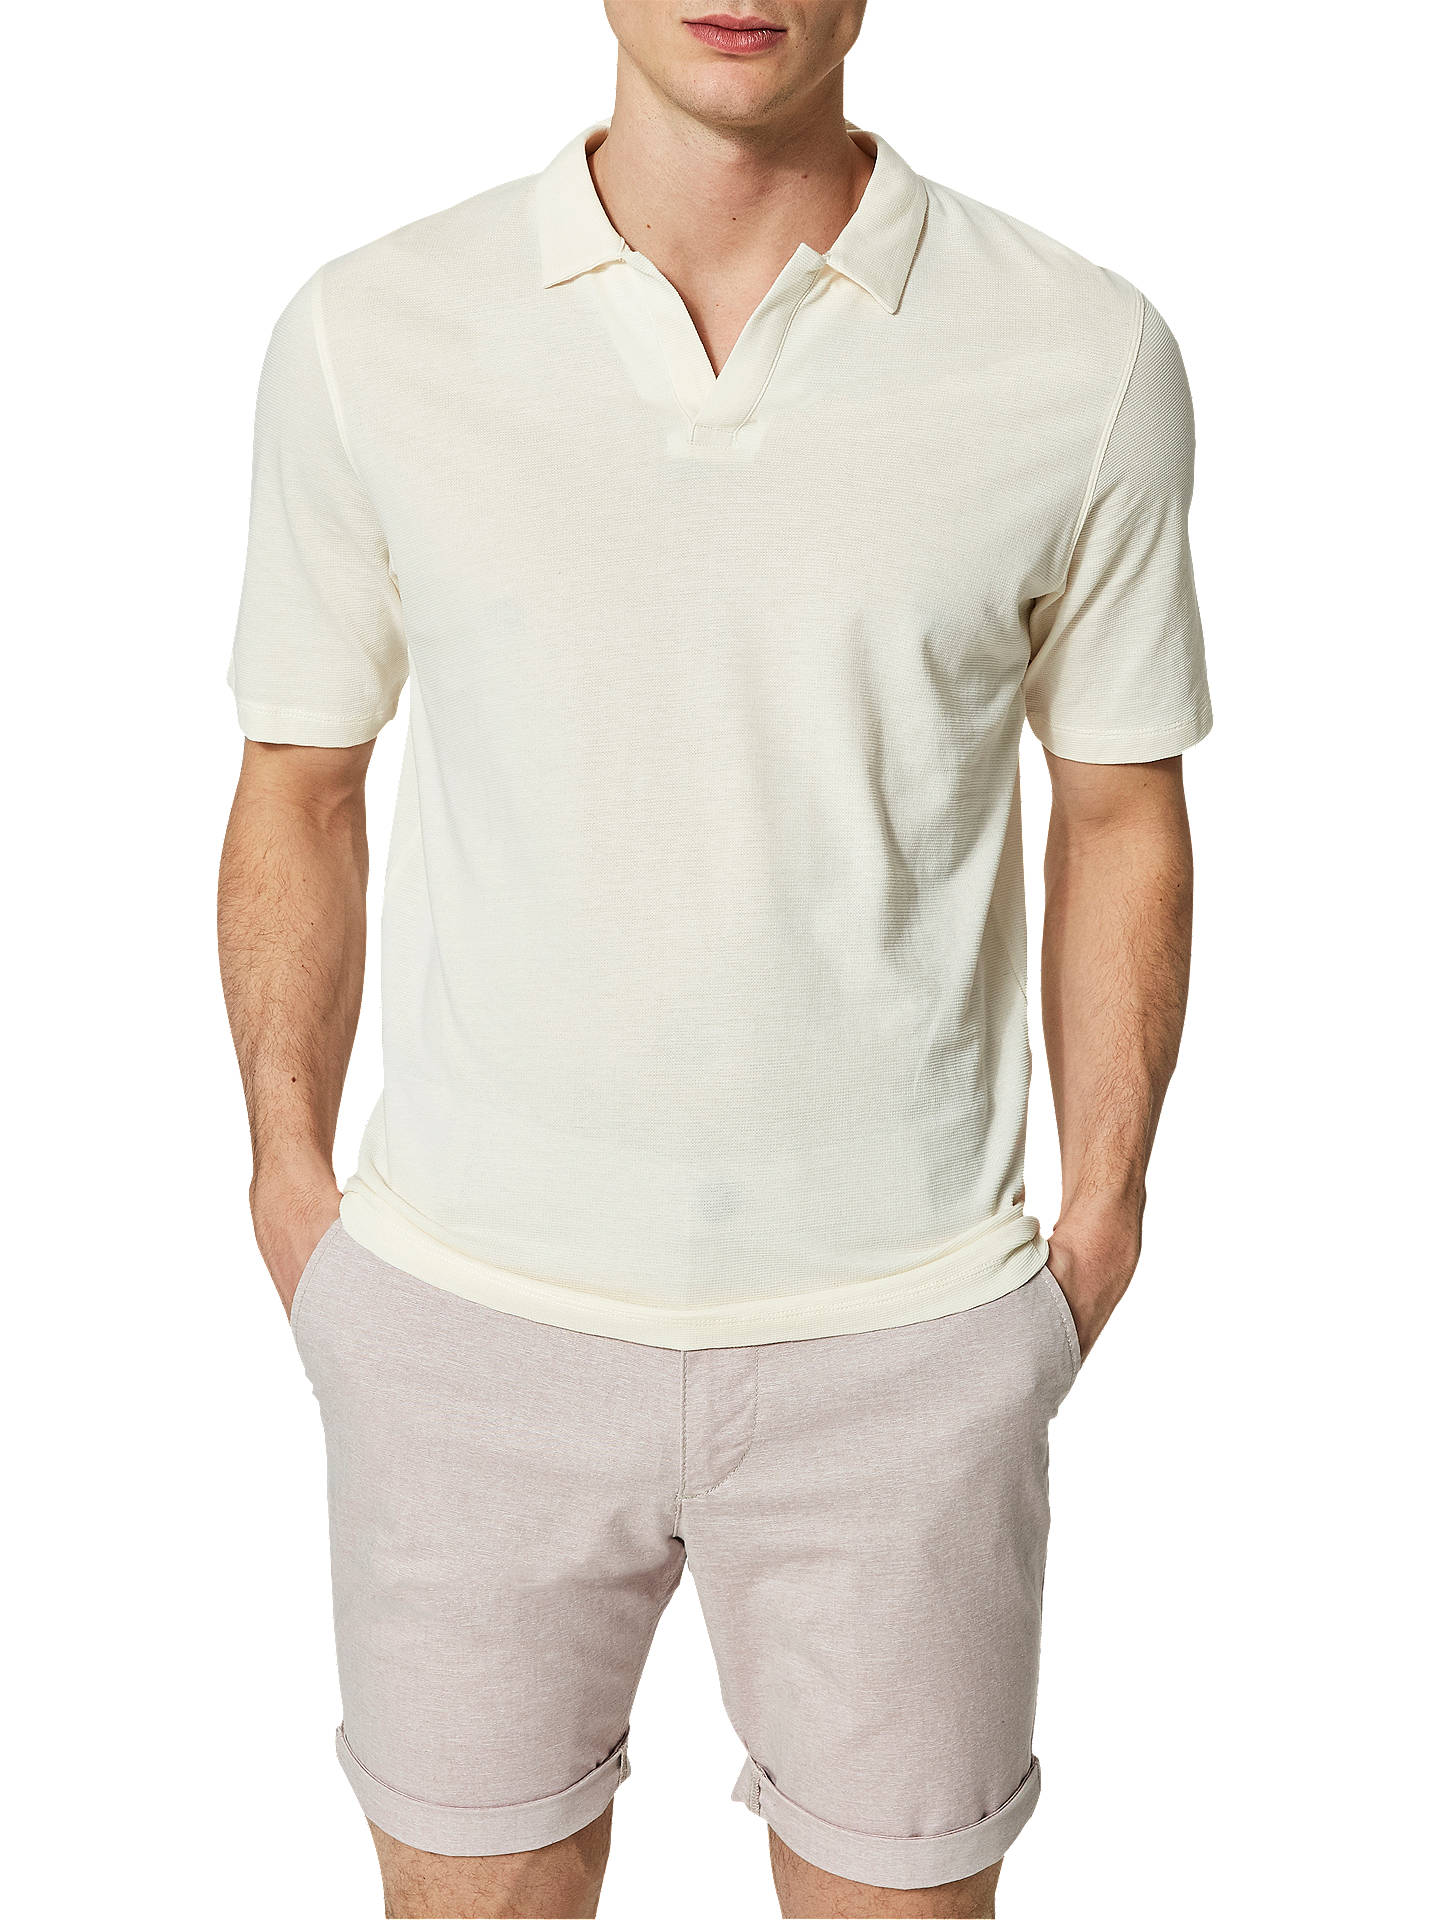 Selected Homme Shhalss V-Neck Polo Shirt at John Lewis & Partners